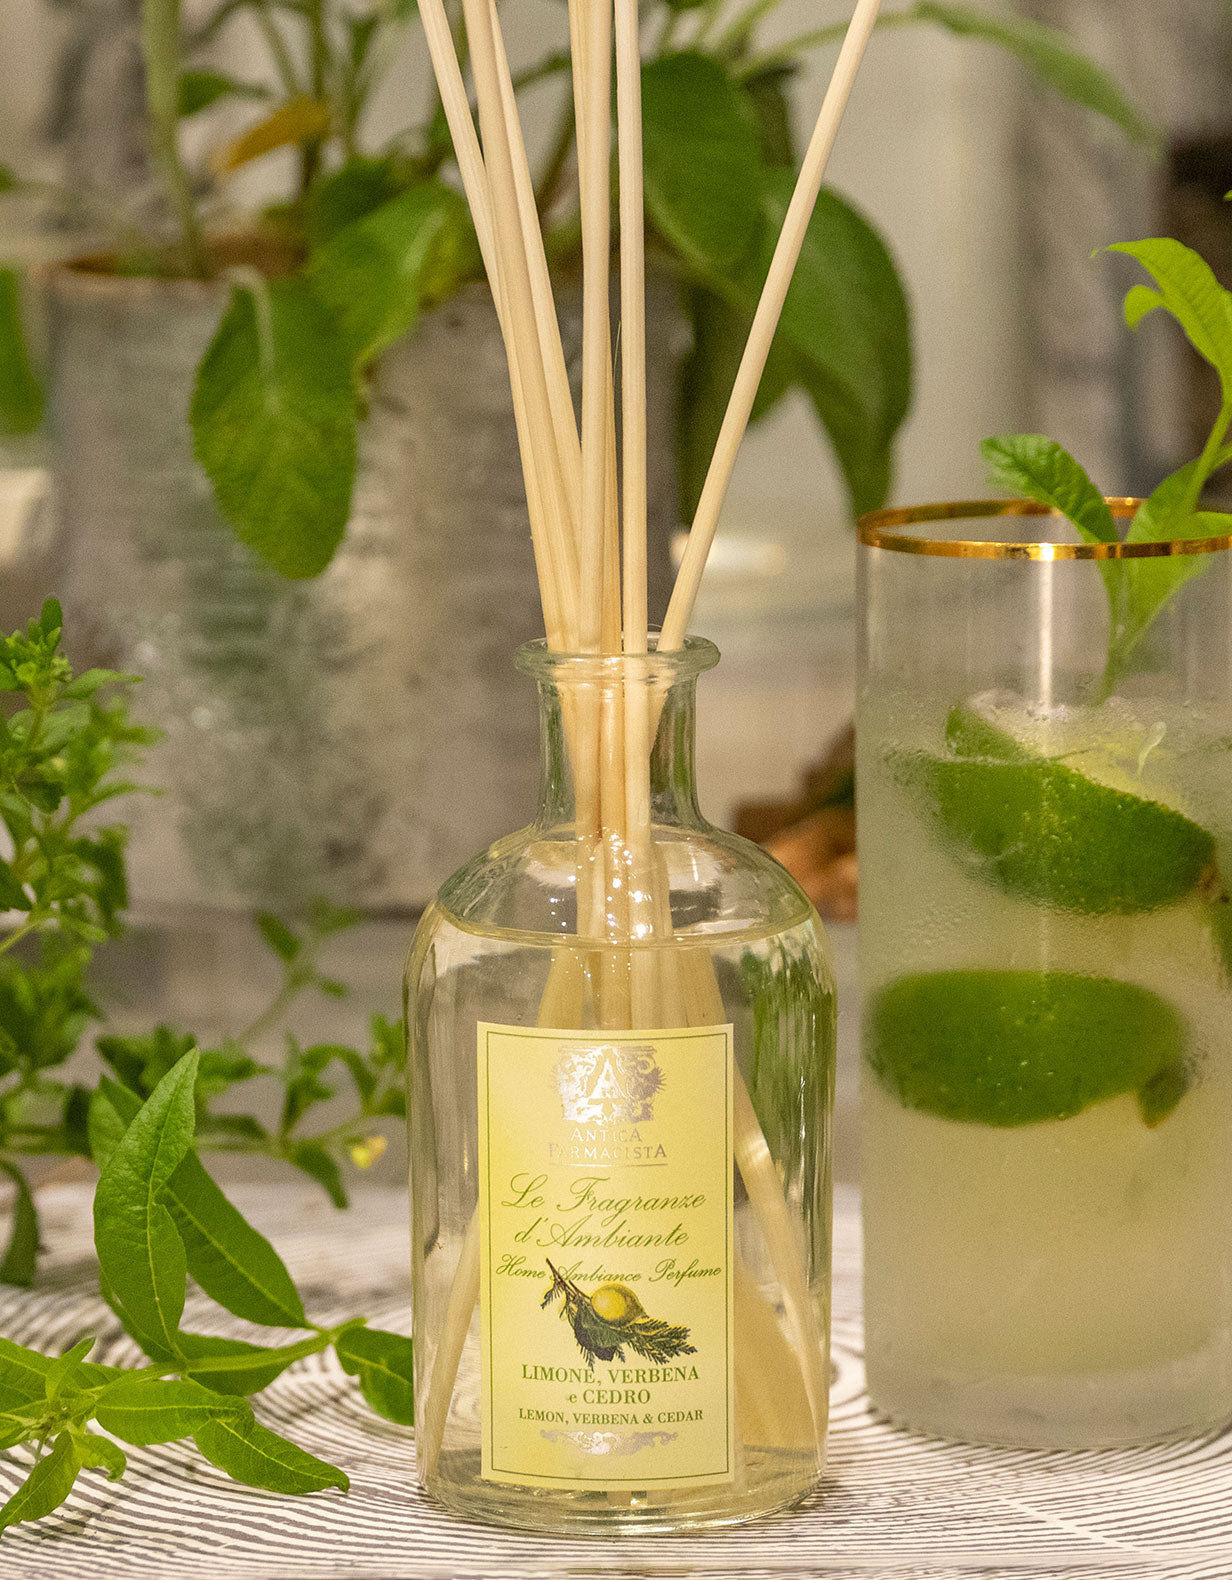 AKARZ Famous brand natural aromatherapy lemon verbena essential